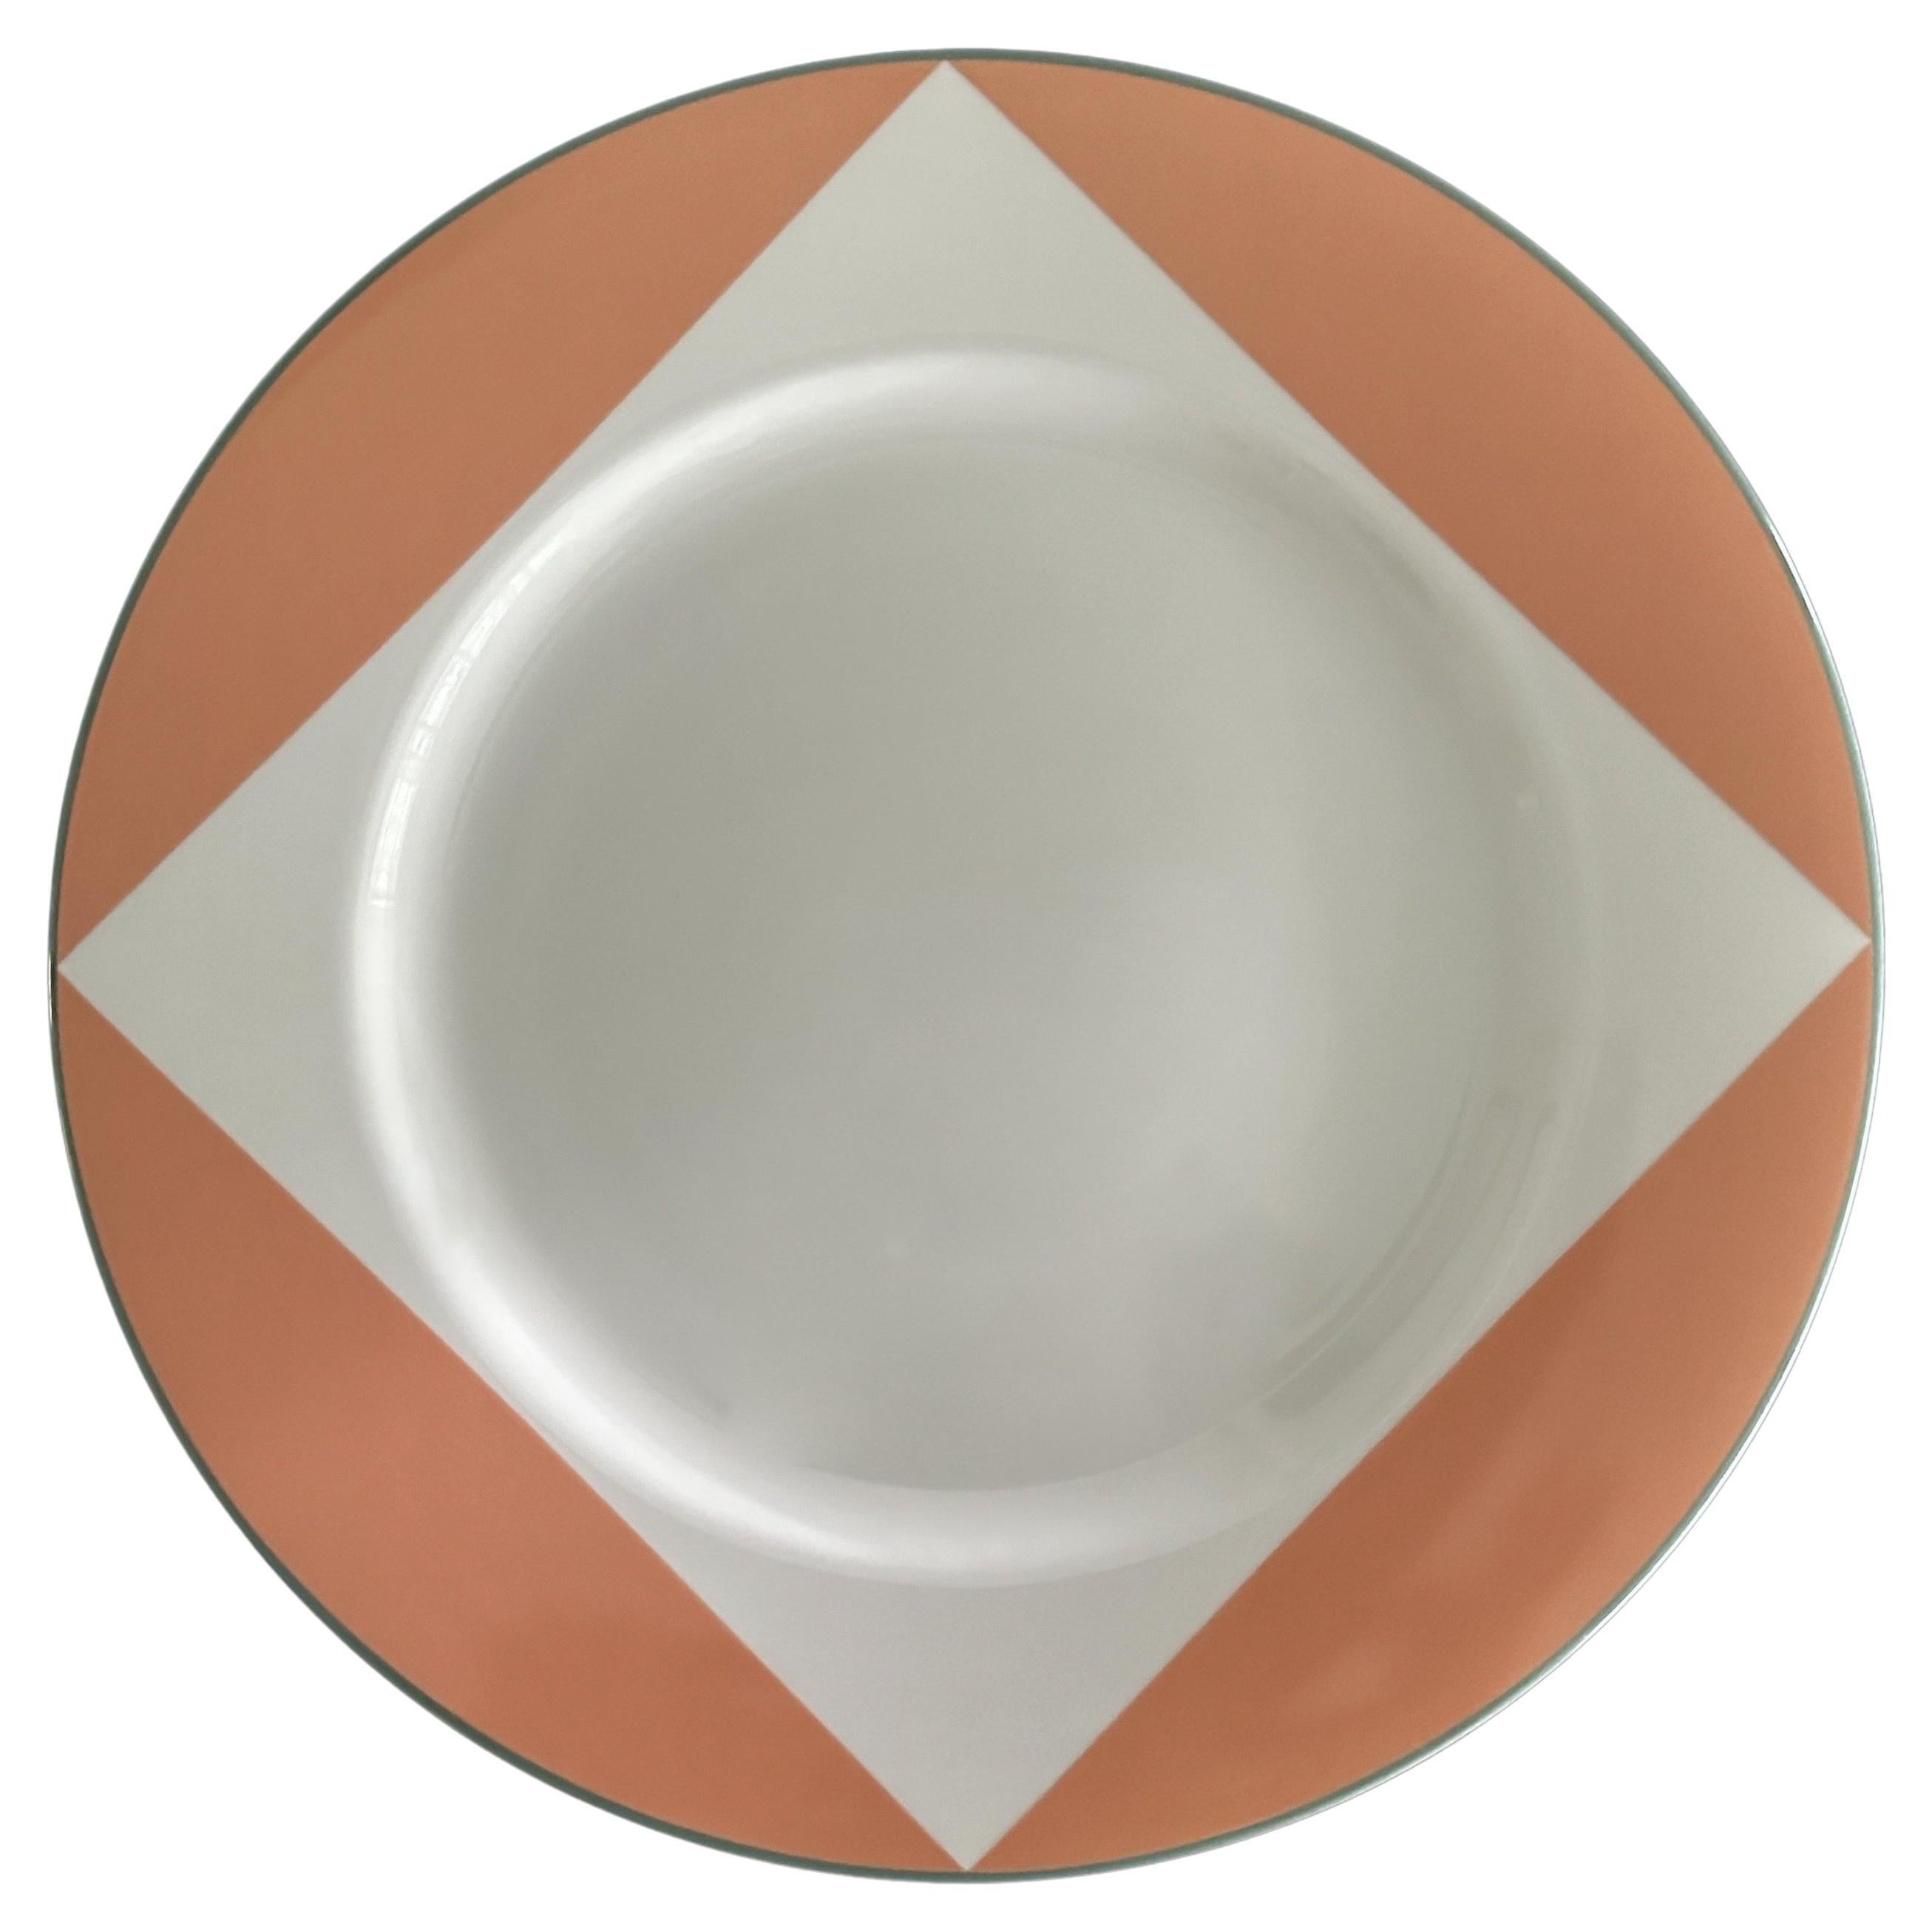 Seven "Peachtree" Dinner Plates Designed By Richard Meier For Swid Powell